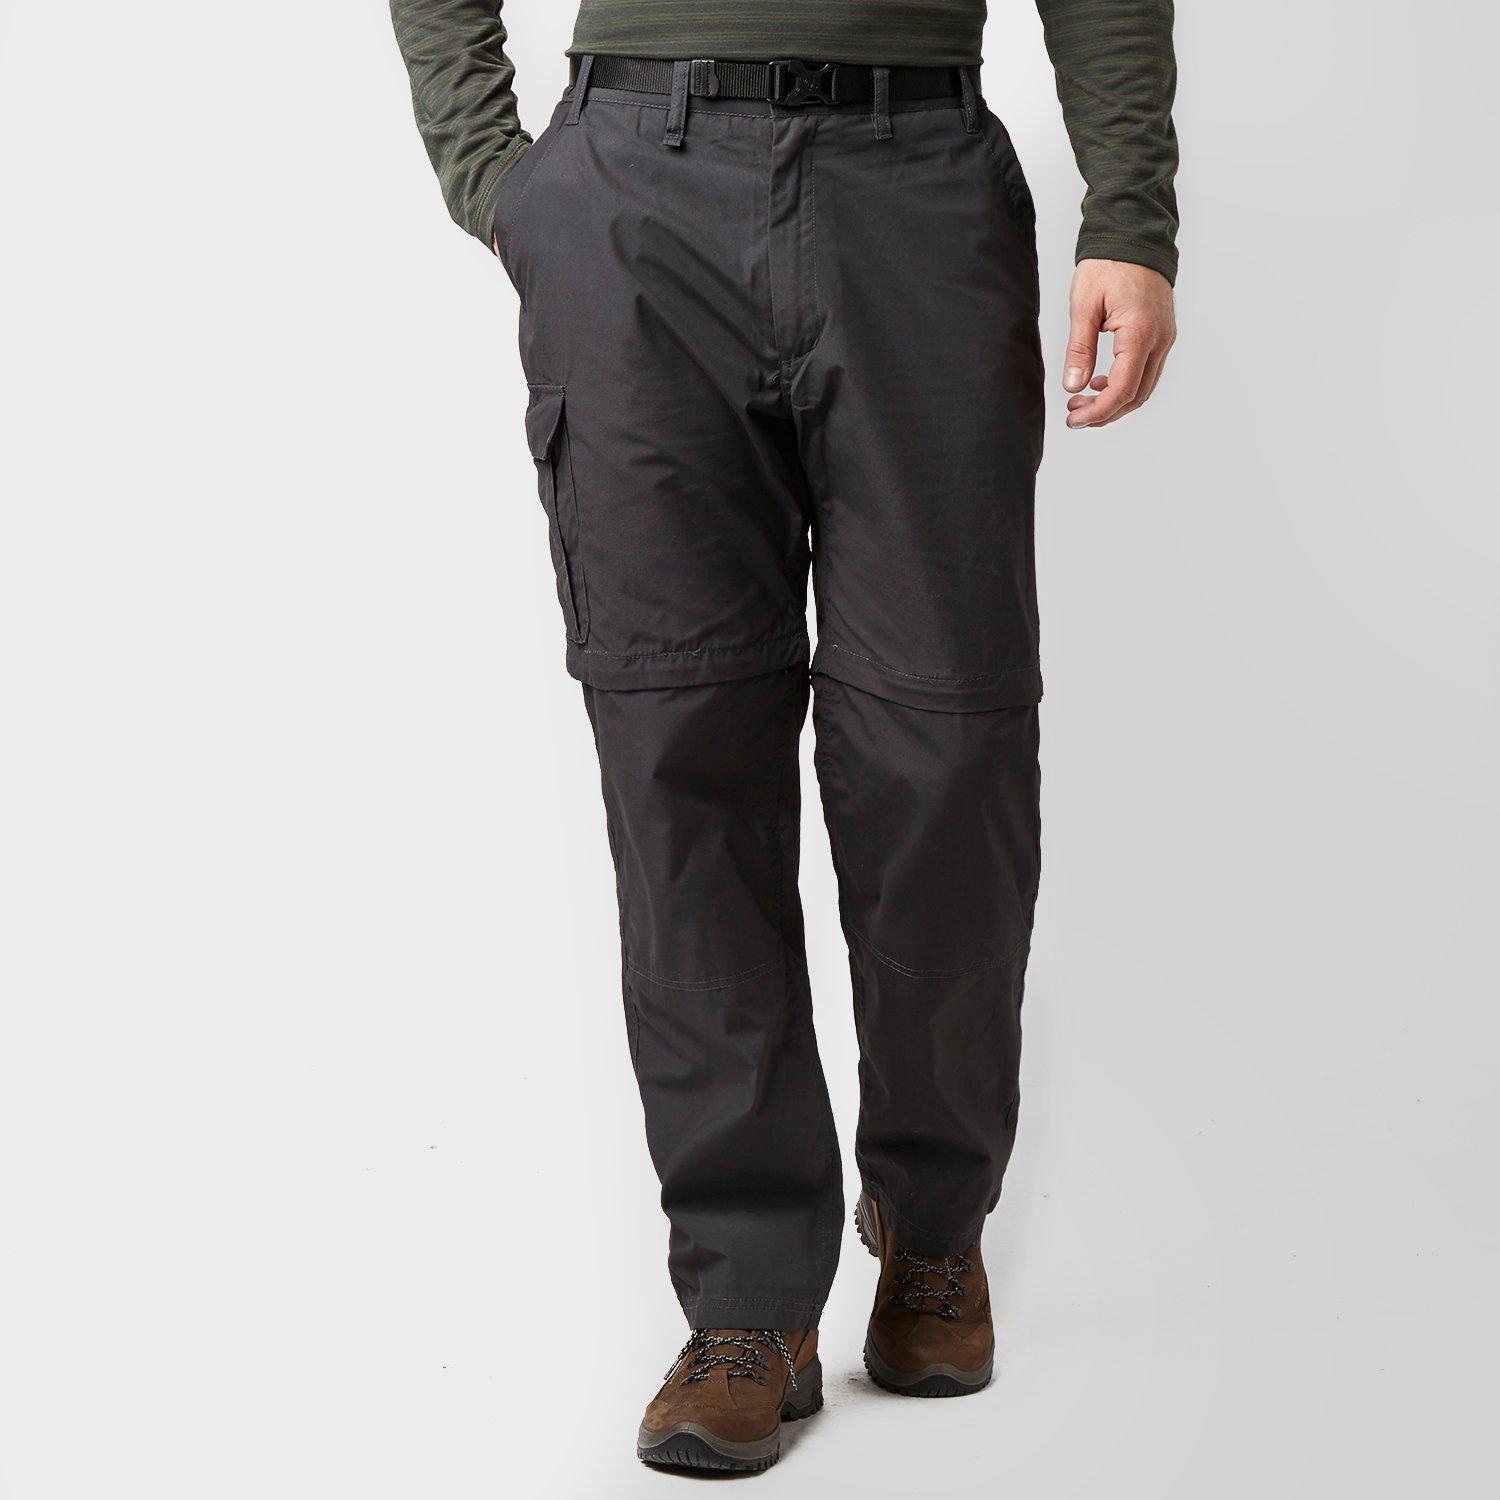 Craghoppers Men's Kiwi Zip Off Trousers, Grey